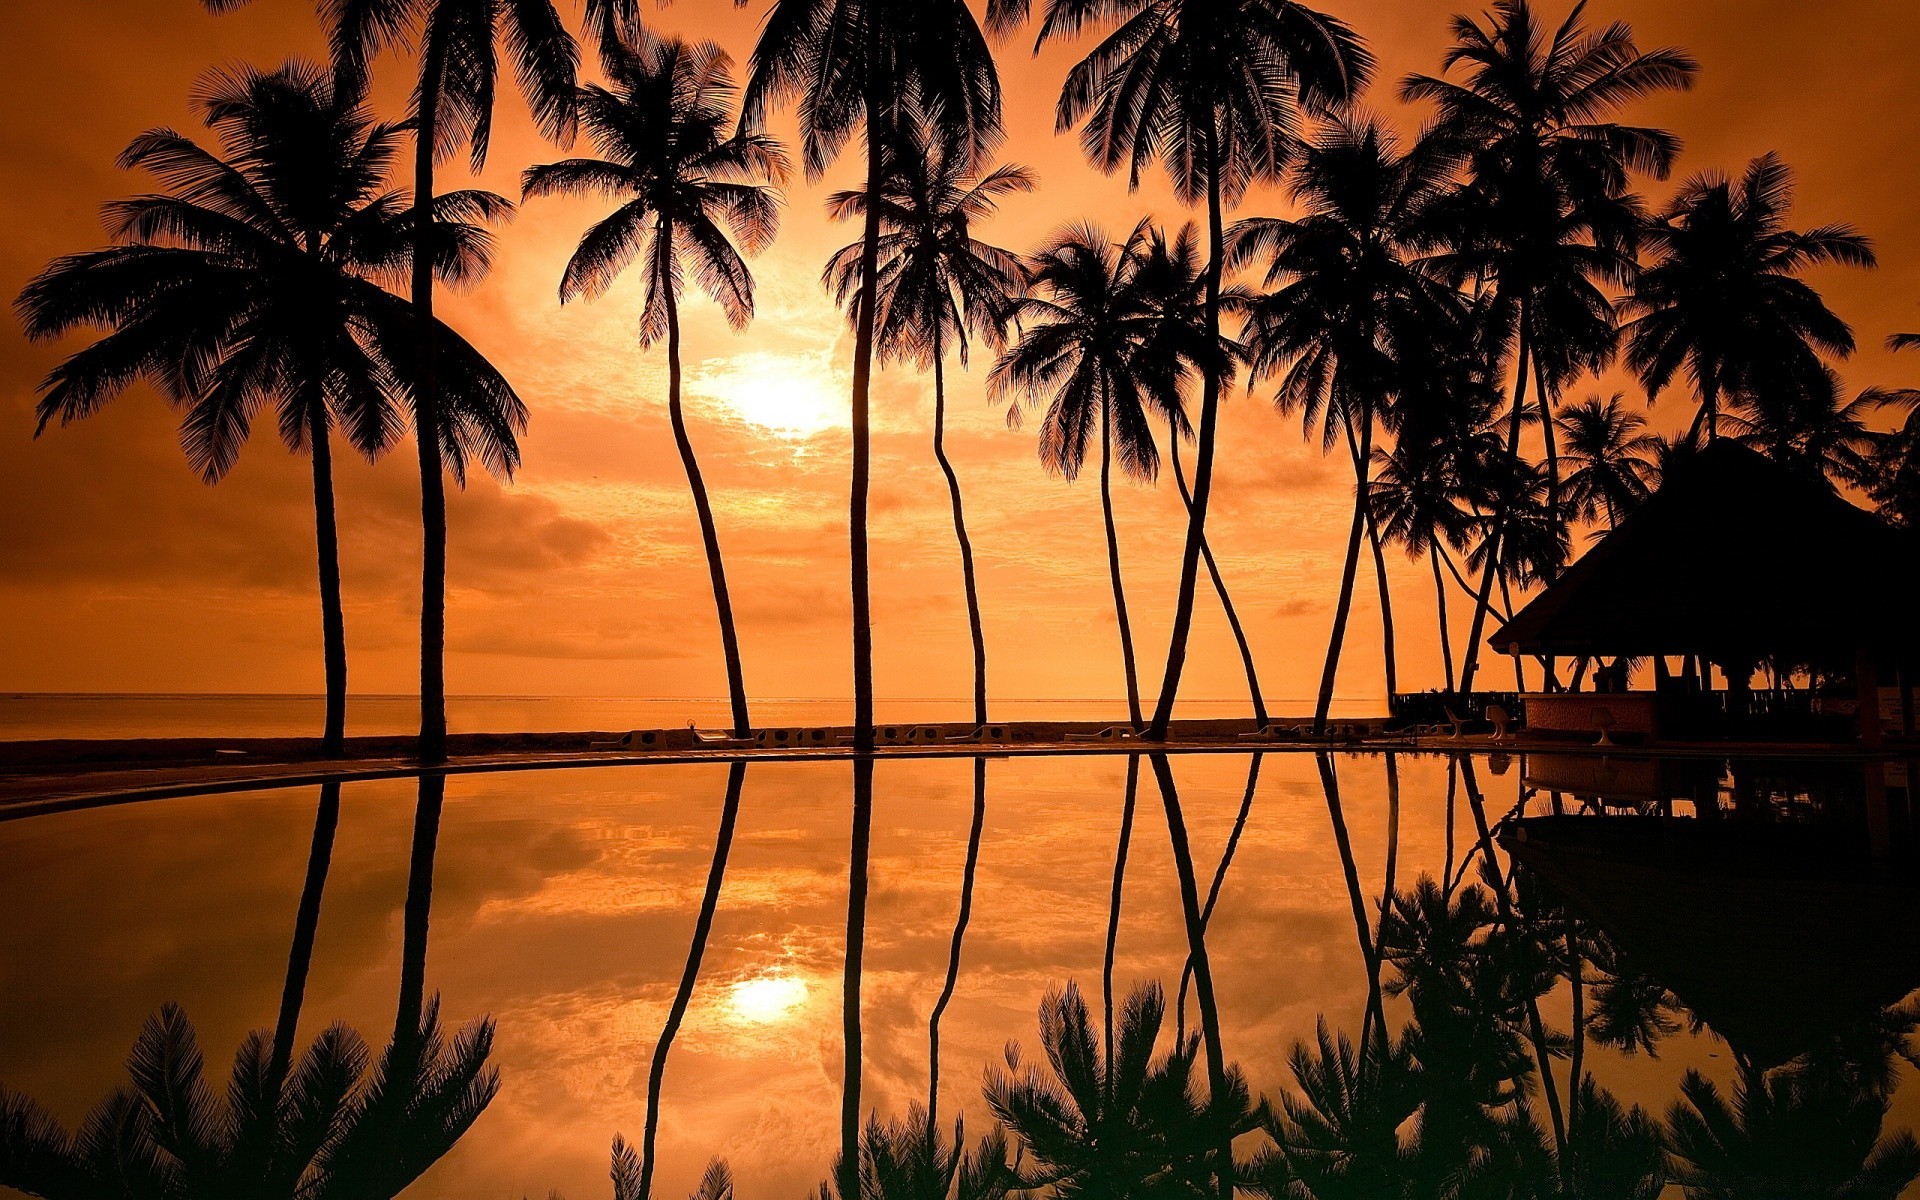 небо ладони тропический пляж кокосовое солнце моря экзотические закат океан дерево рай отпуск остров курорт идиллия лето песок путешествия силуэт